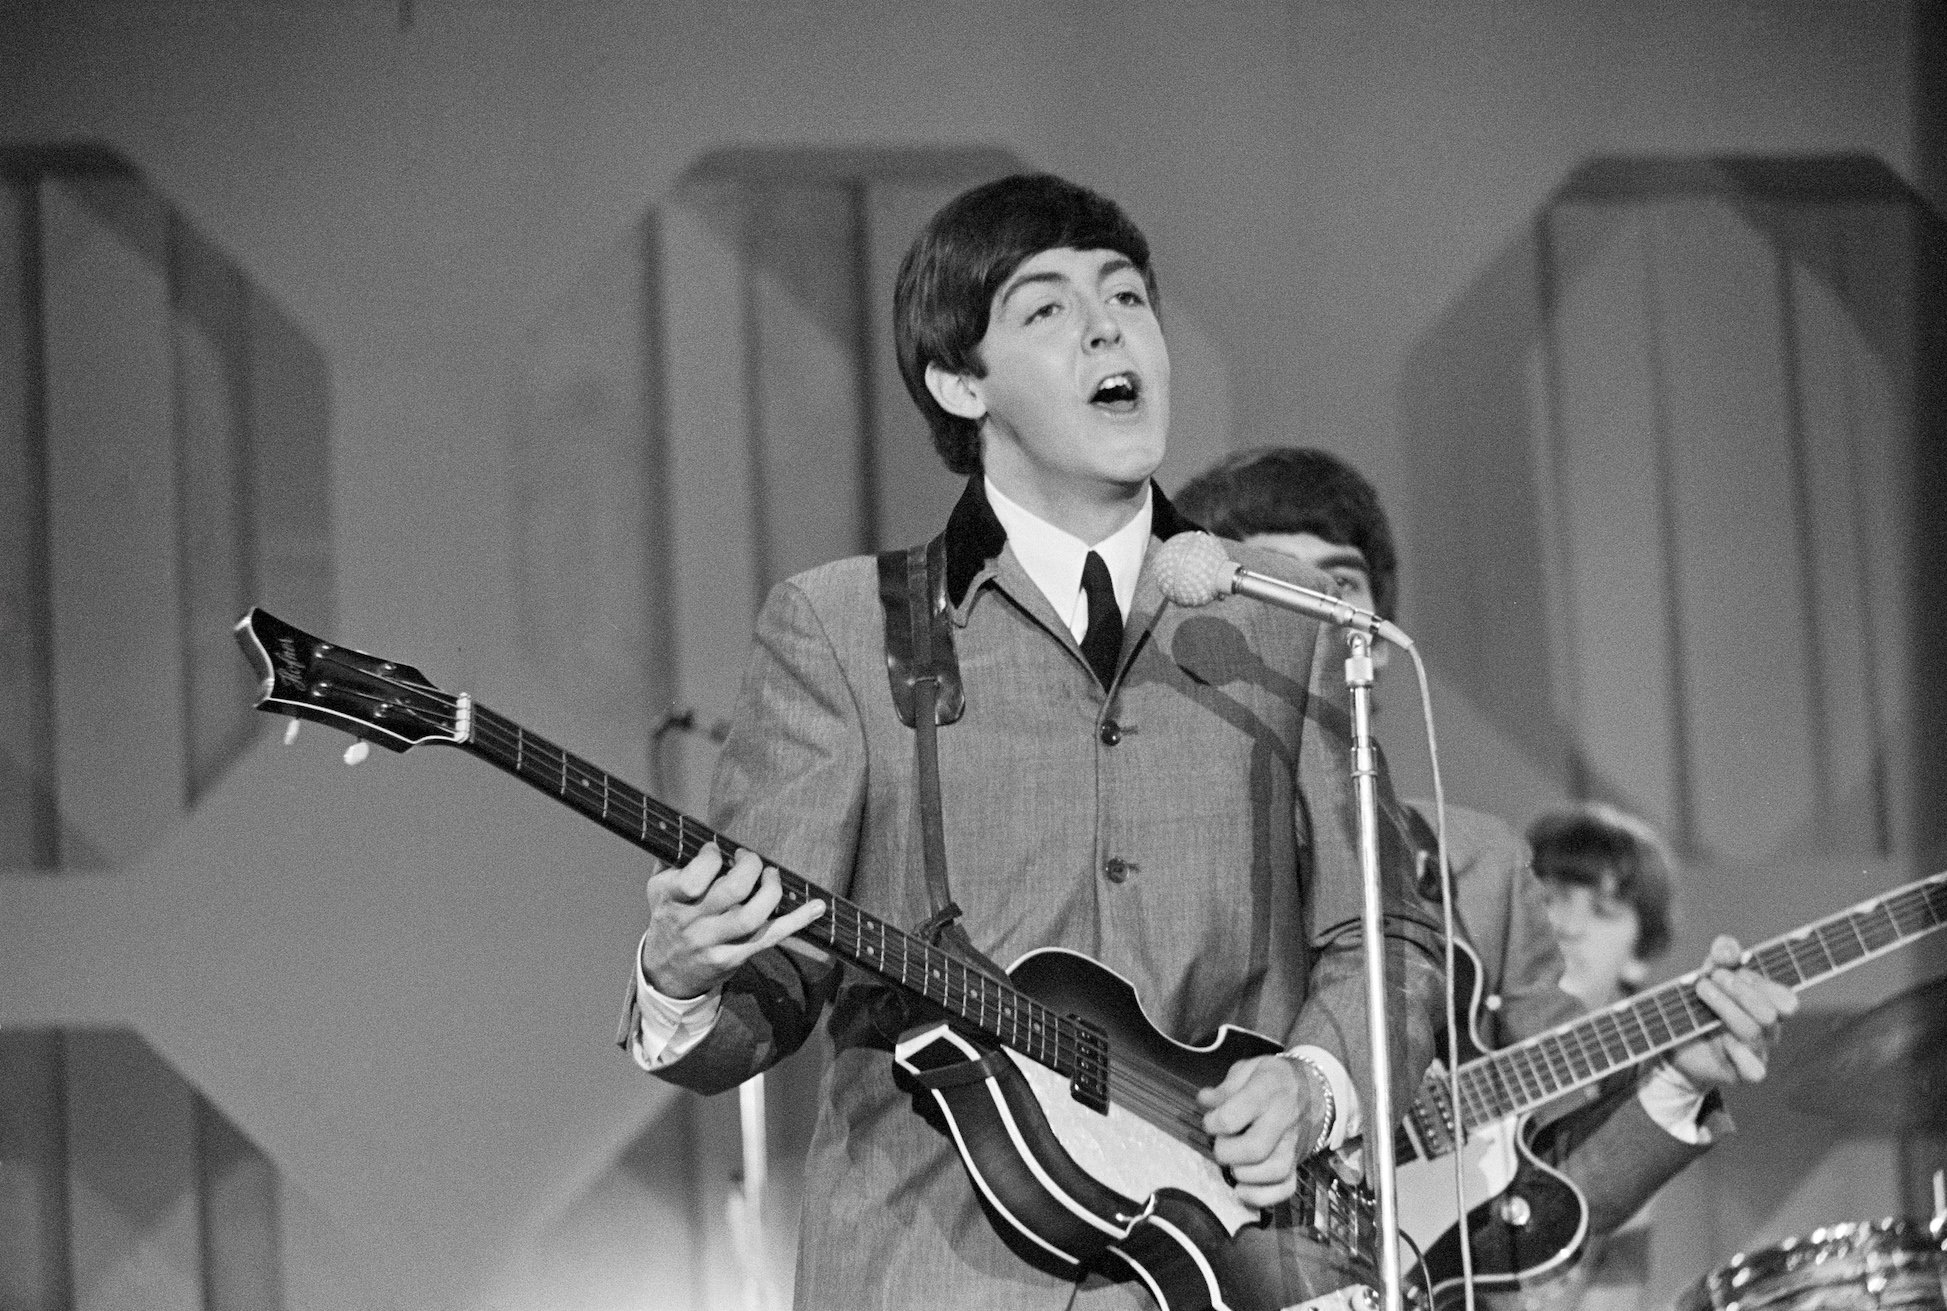 Paul McCartney and The Beatles perform on The Ed Sullivan Show